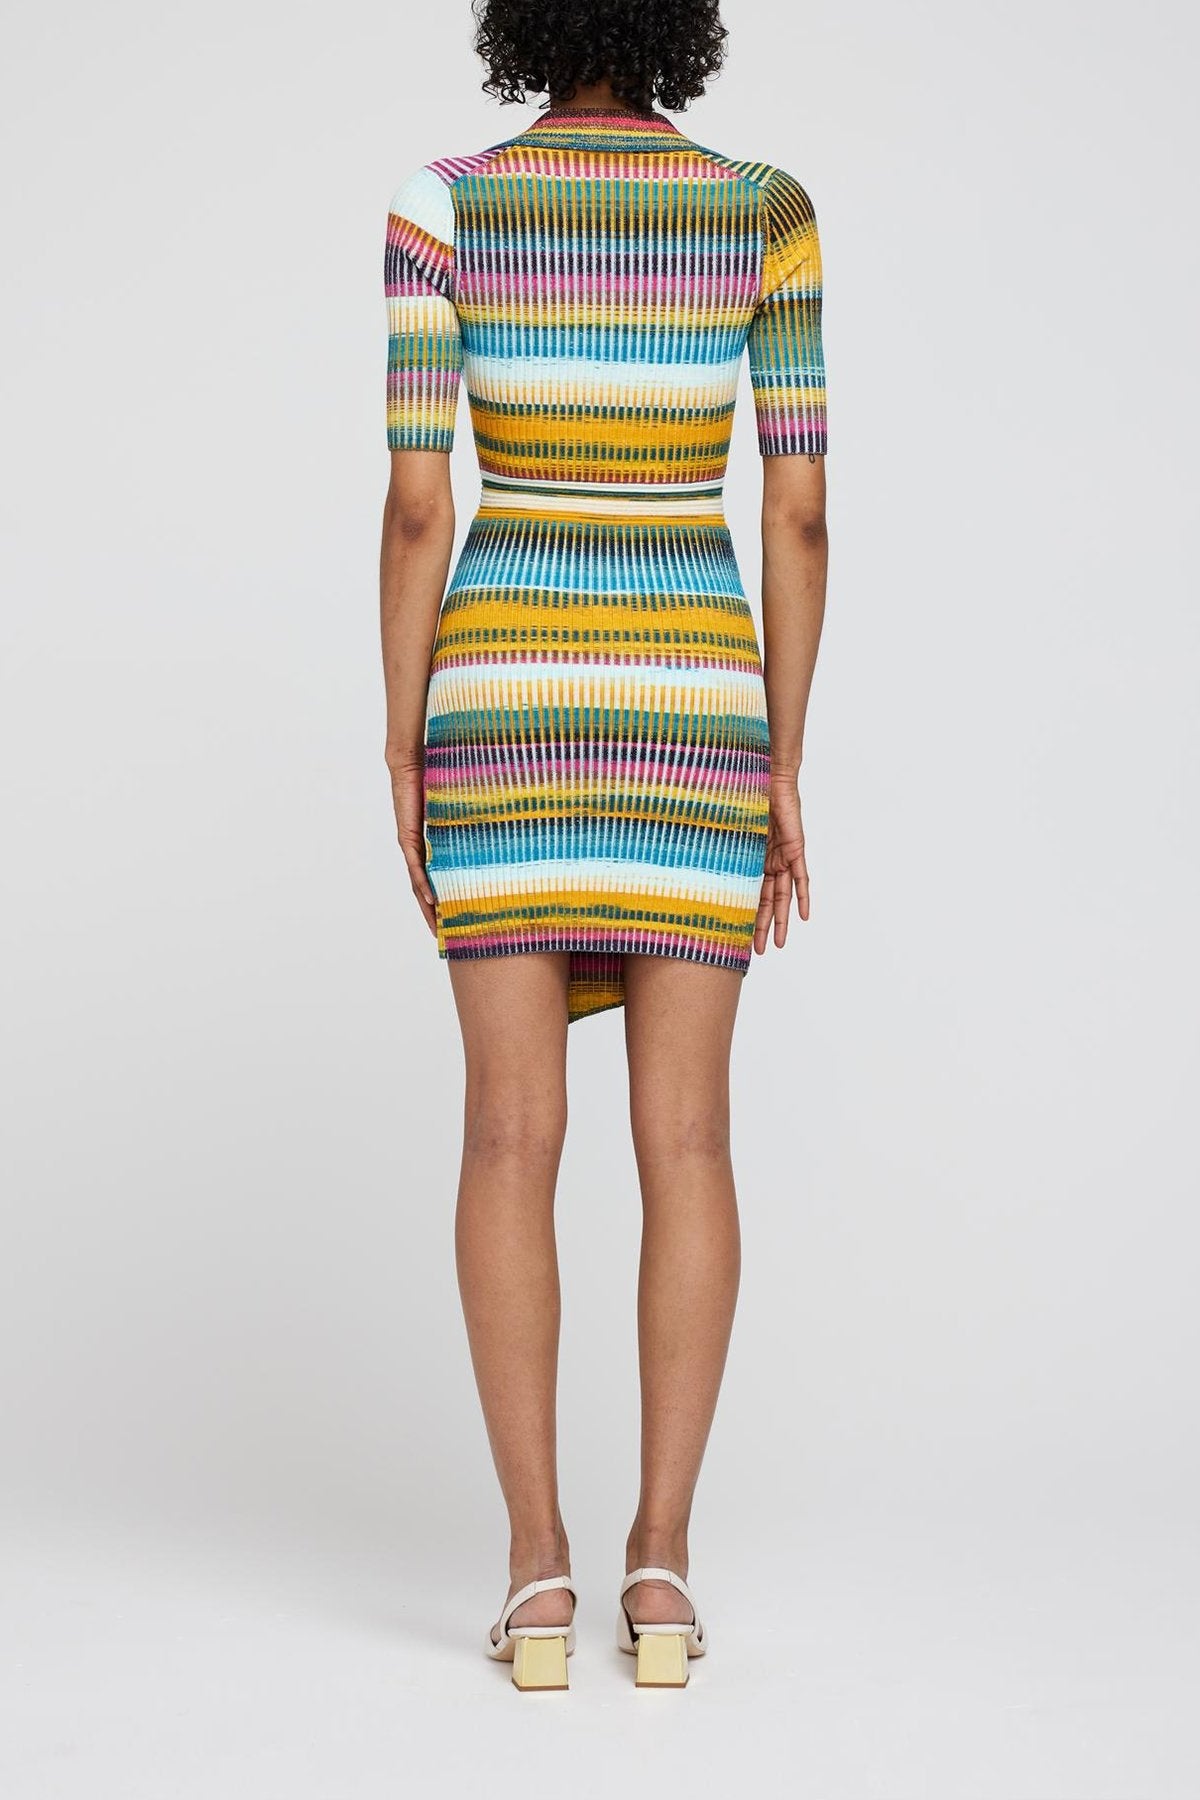 Solana Polo Mini Dress in Sunset Space Dye - shop-olivia.com